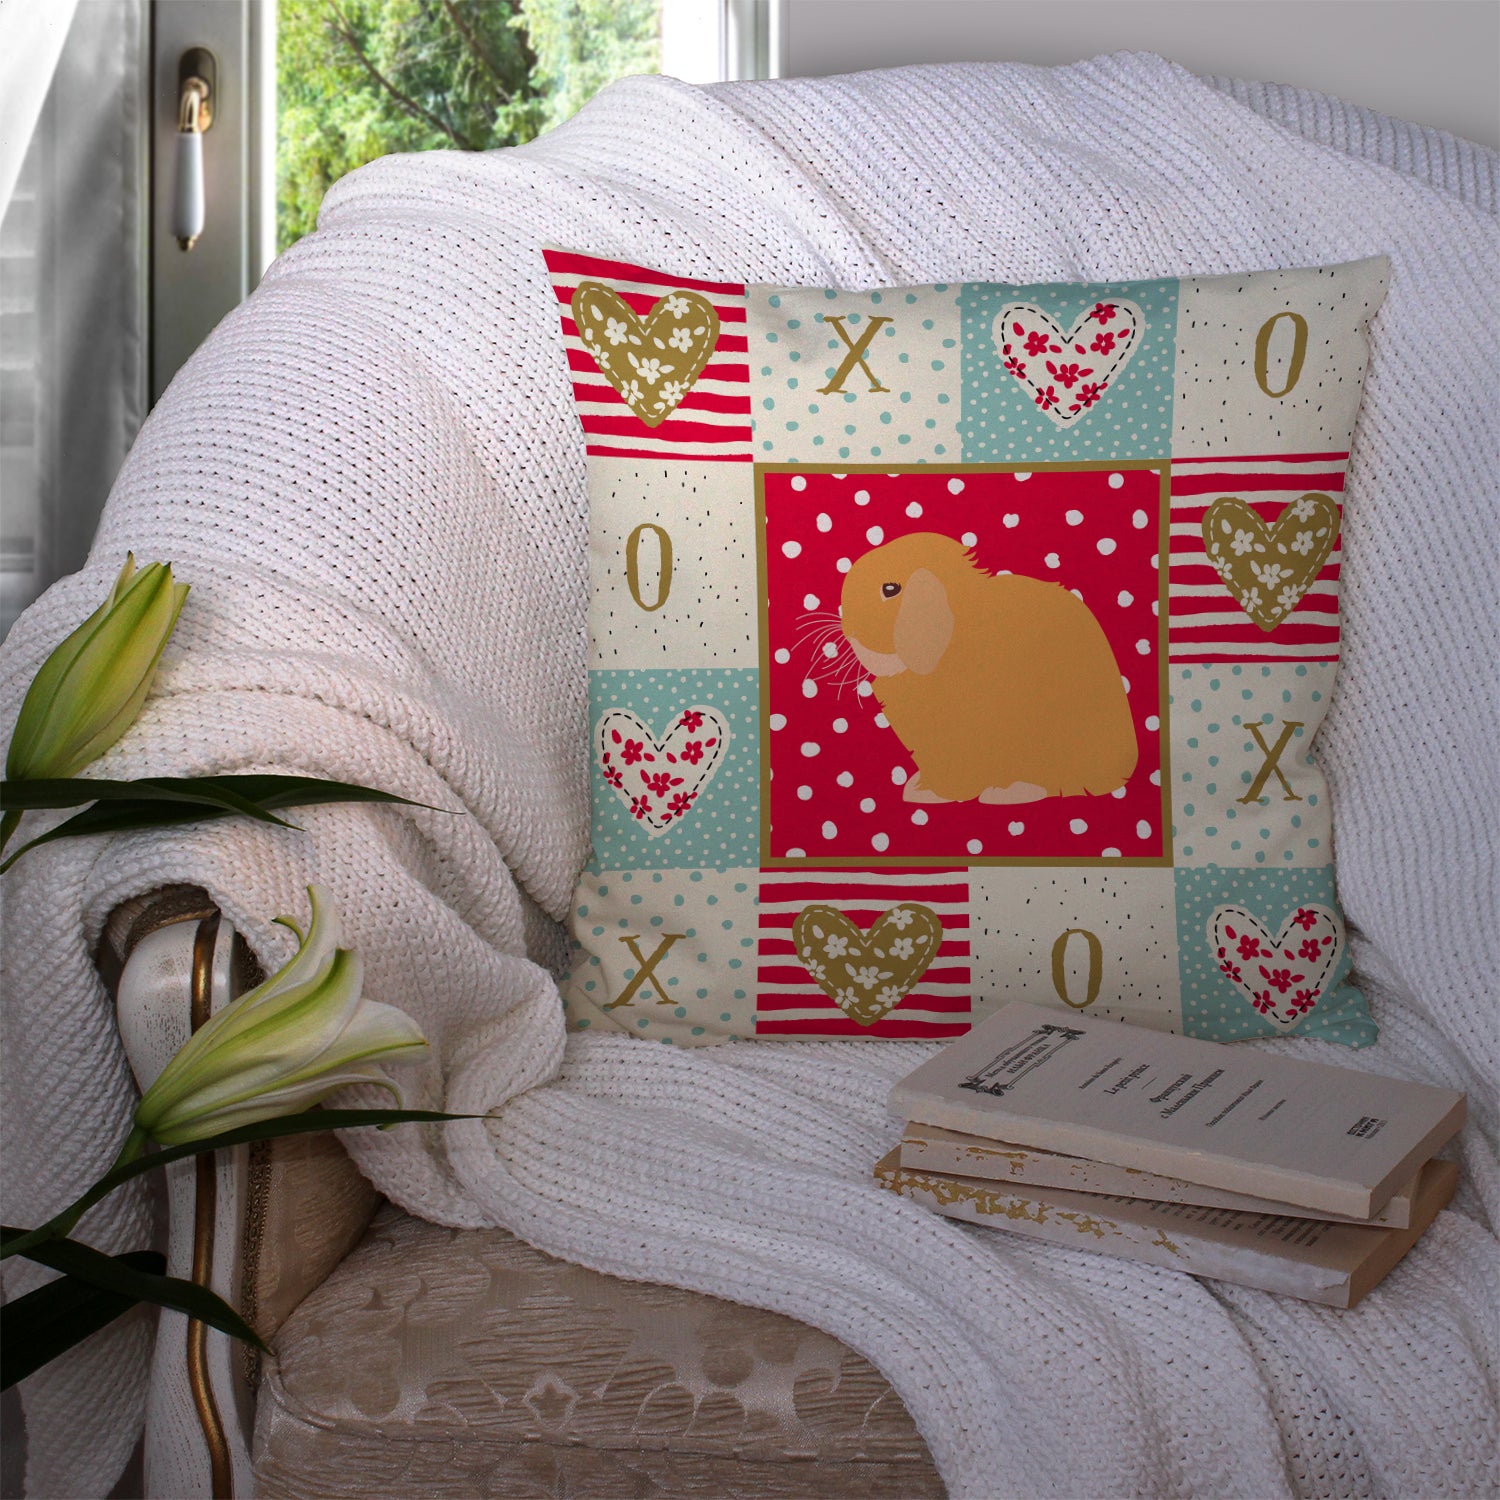 Holland Lop Rabbit Love Fabric Decorative Pillow CK5395PW1414 - the-store.com